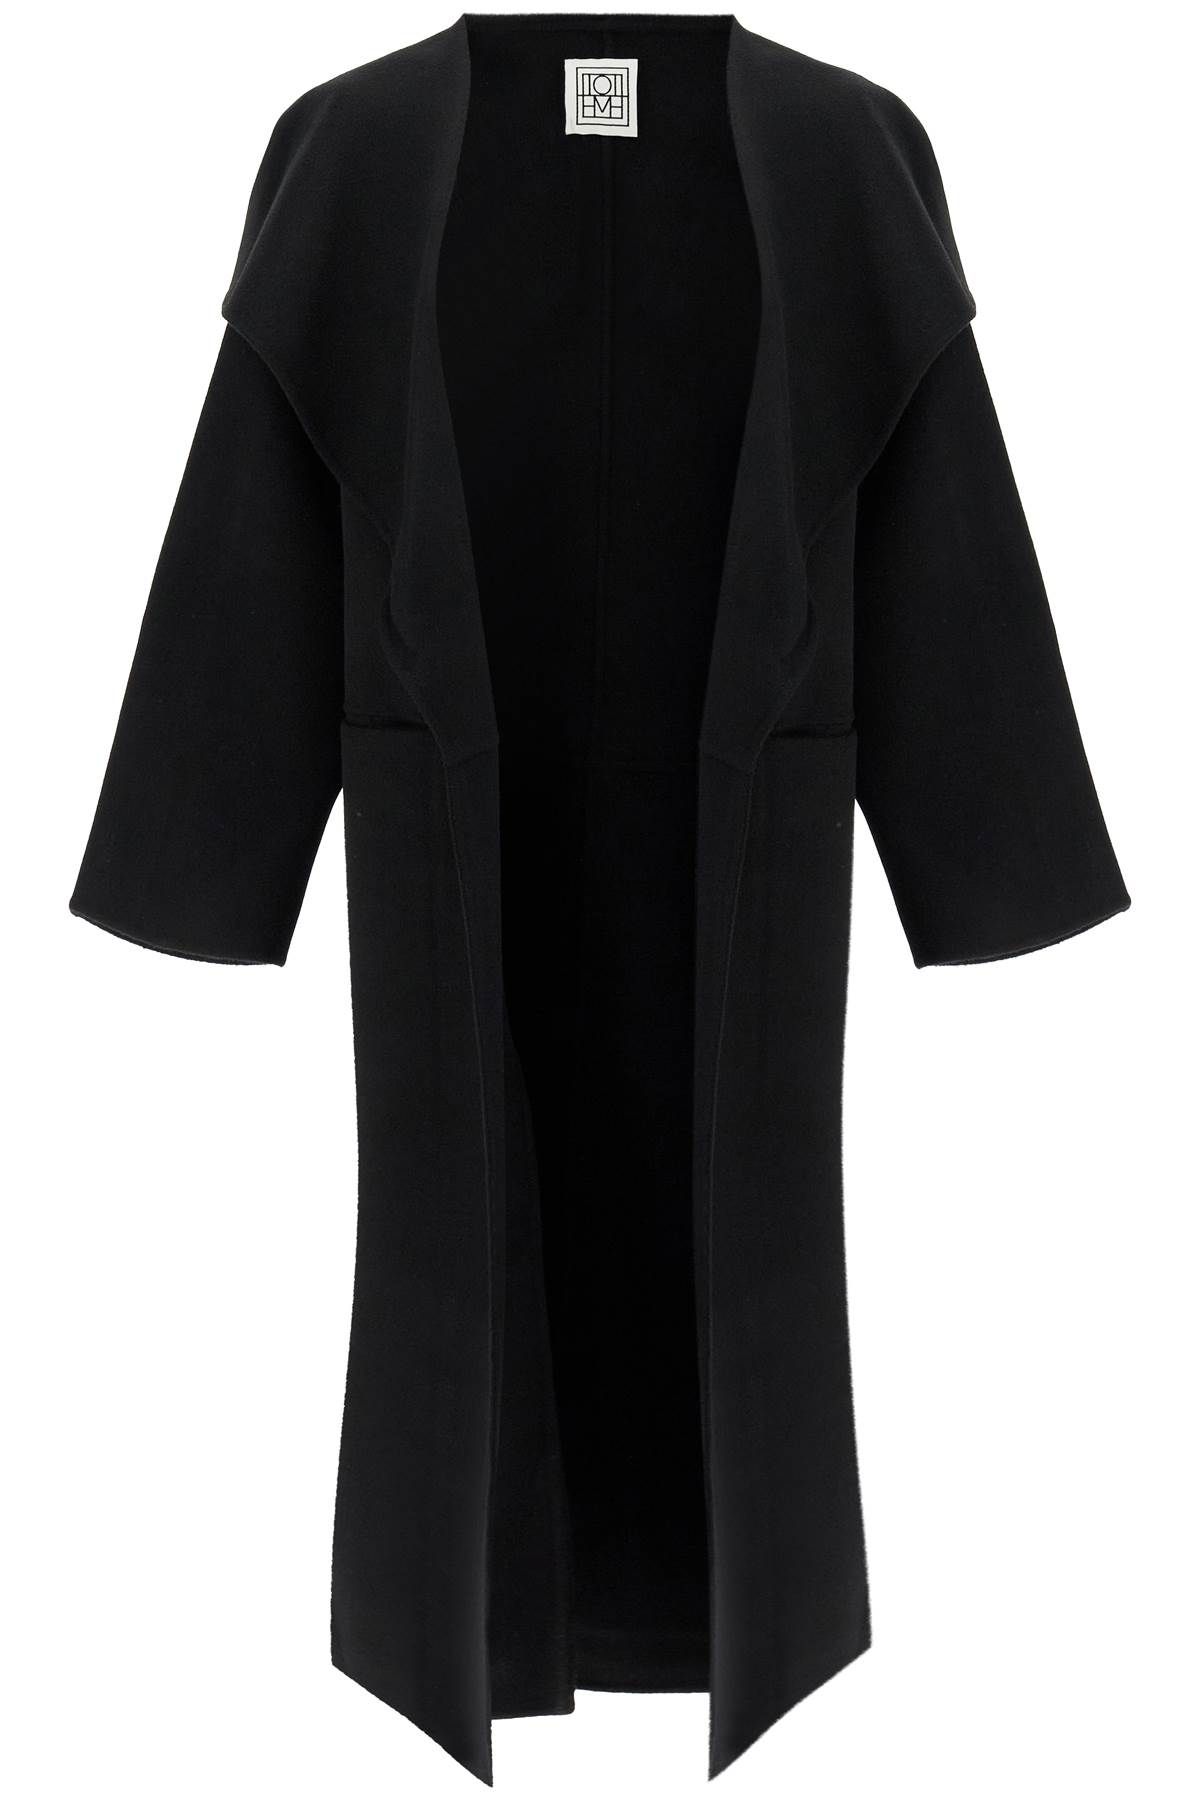 Toteme TOTEME signature wool-cashmere coat